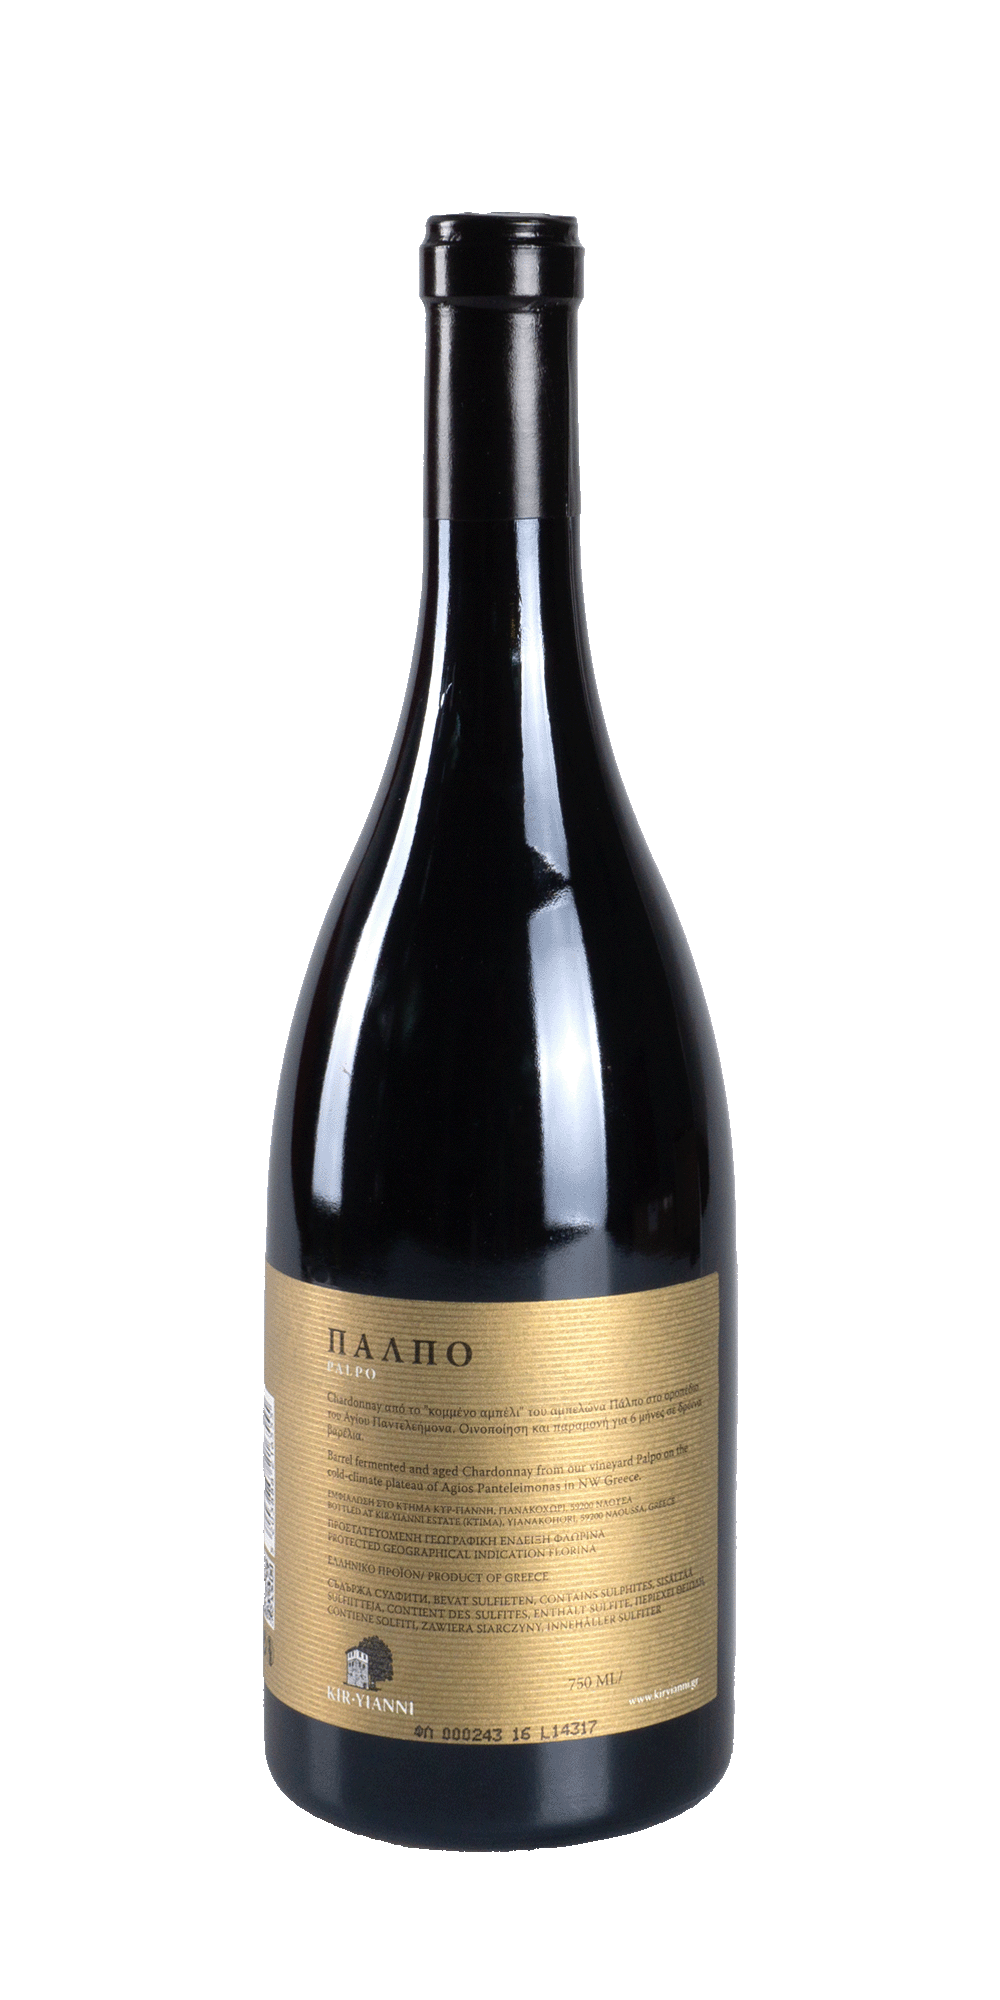 Palpo Chardonnay Single Vineyard 2016 - Kir-Yianni